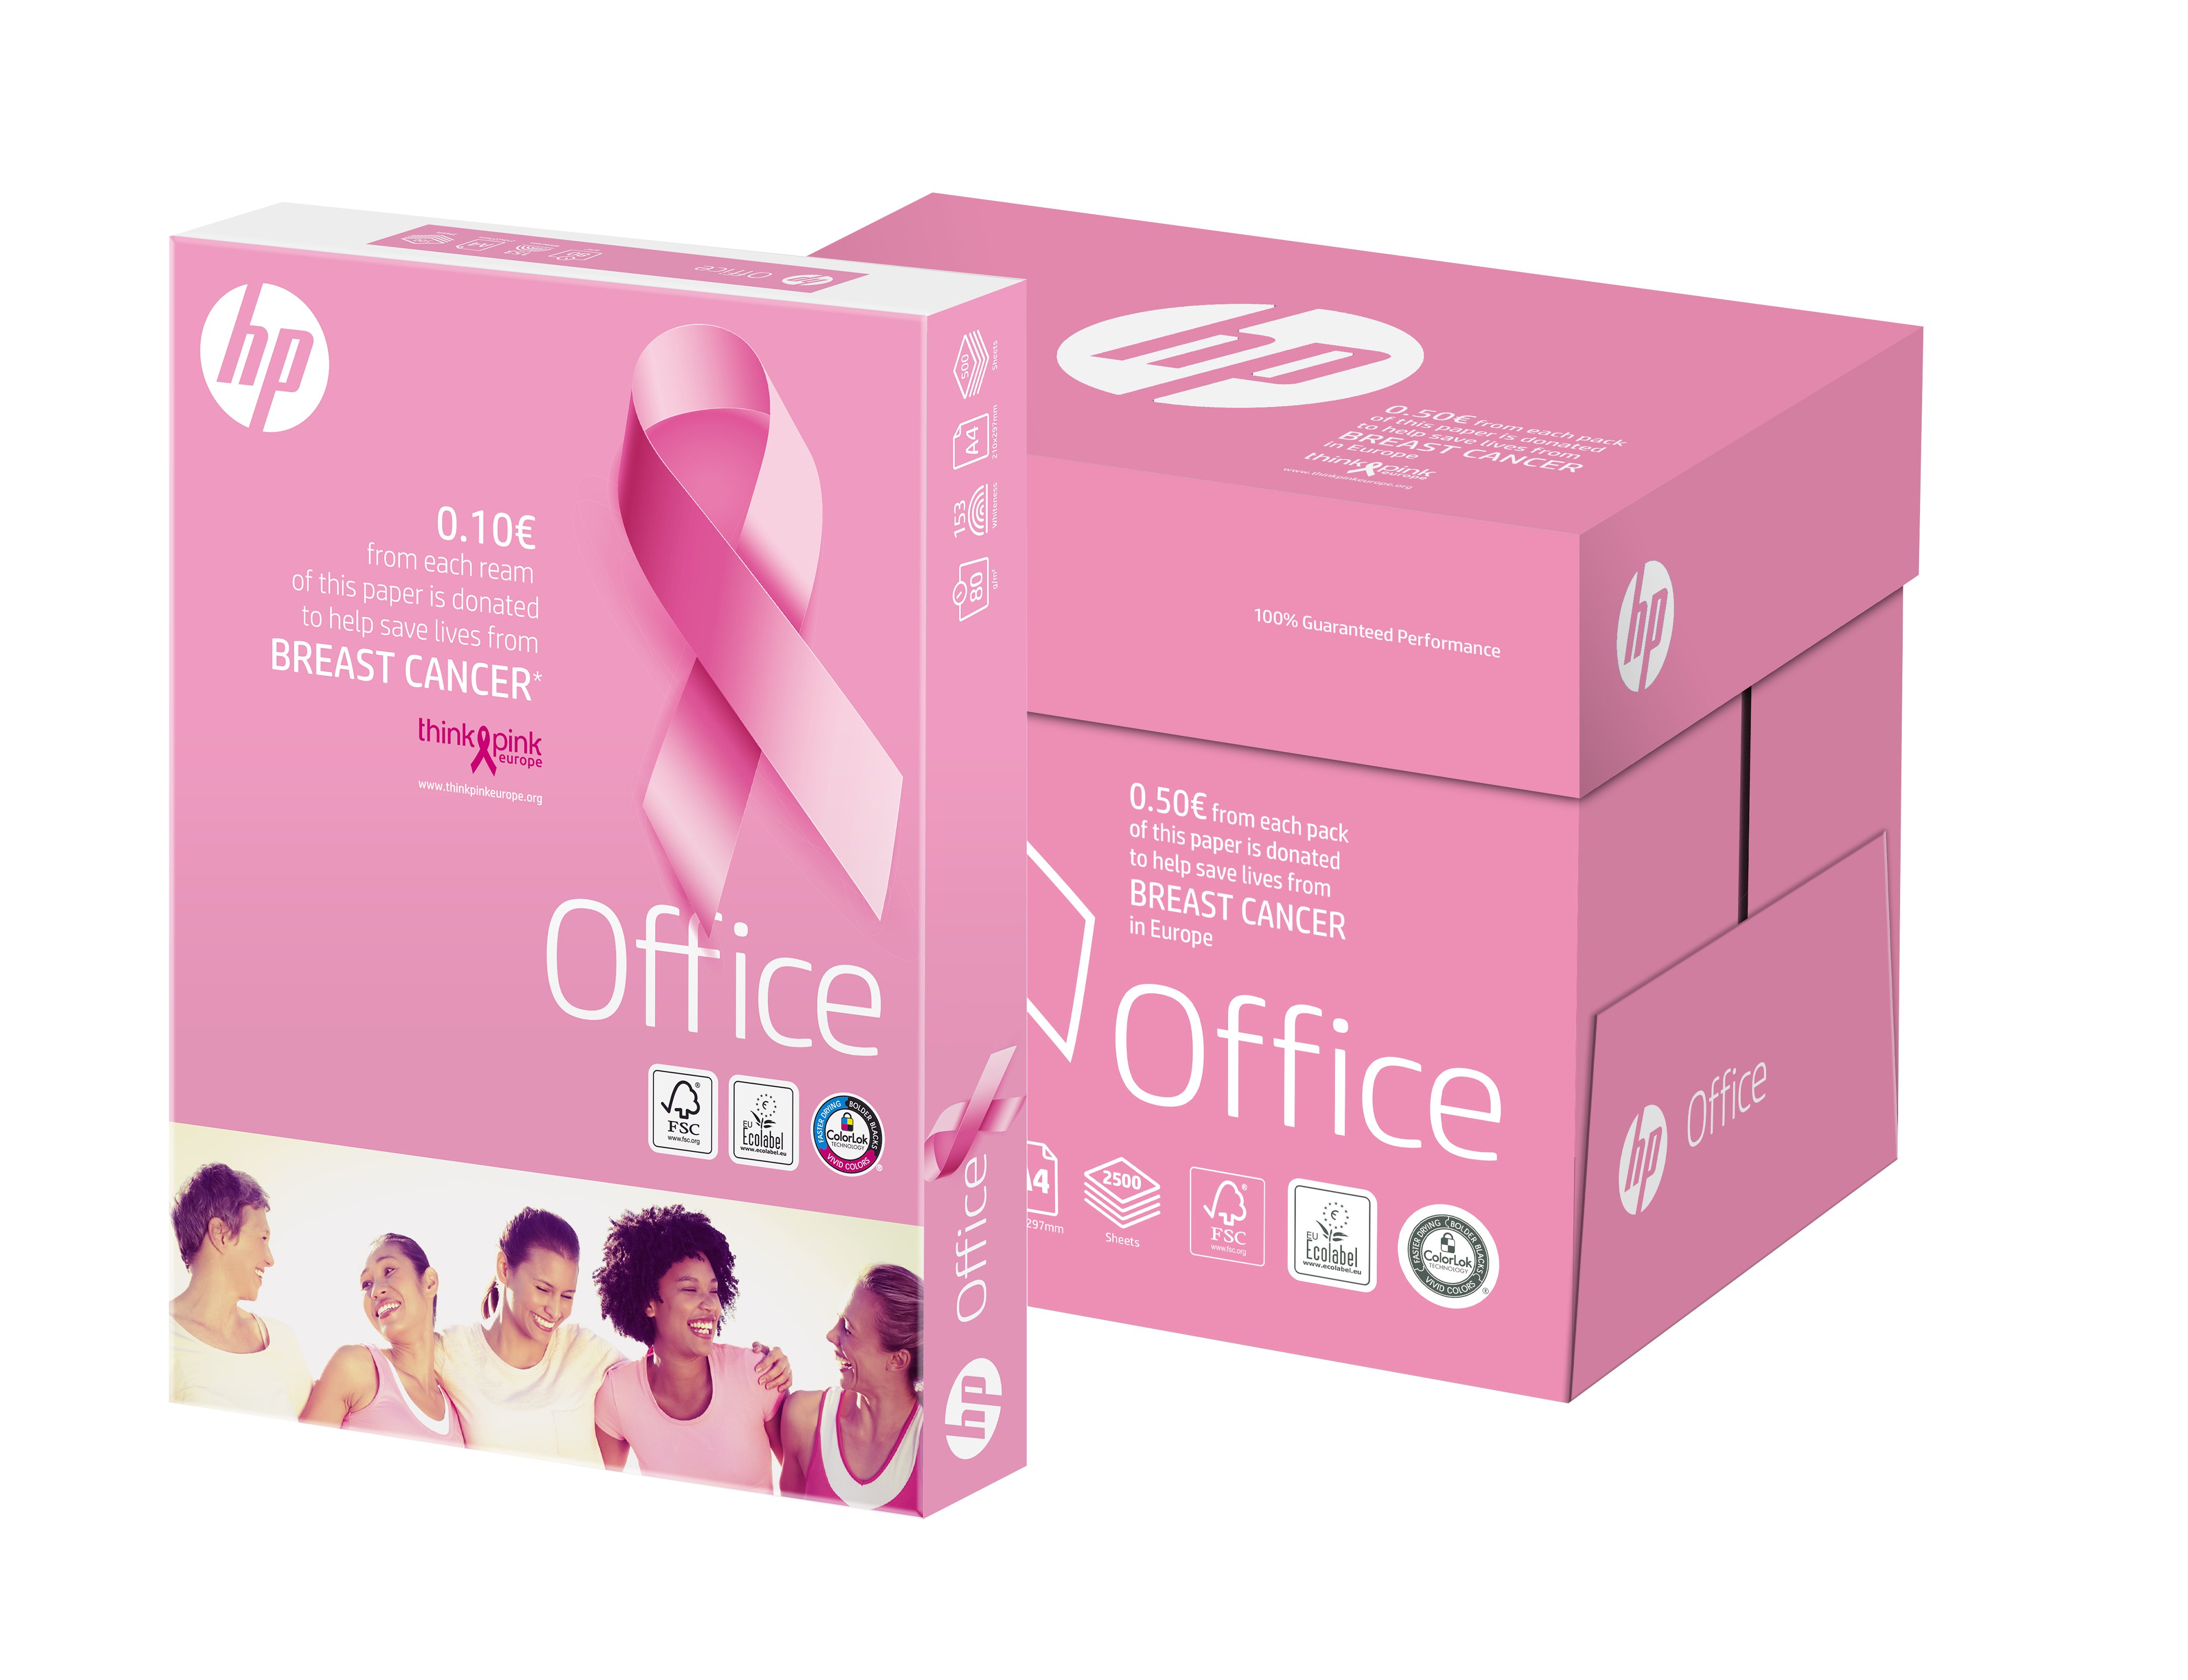 HP Office Pink Ream Papier A4 80 g/m² Wit